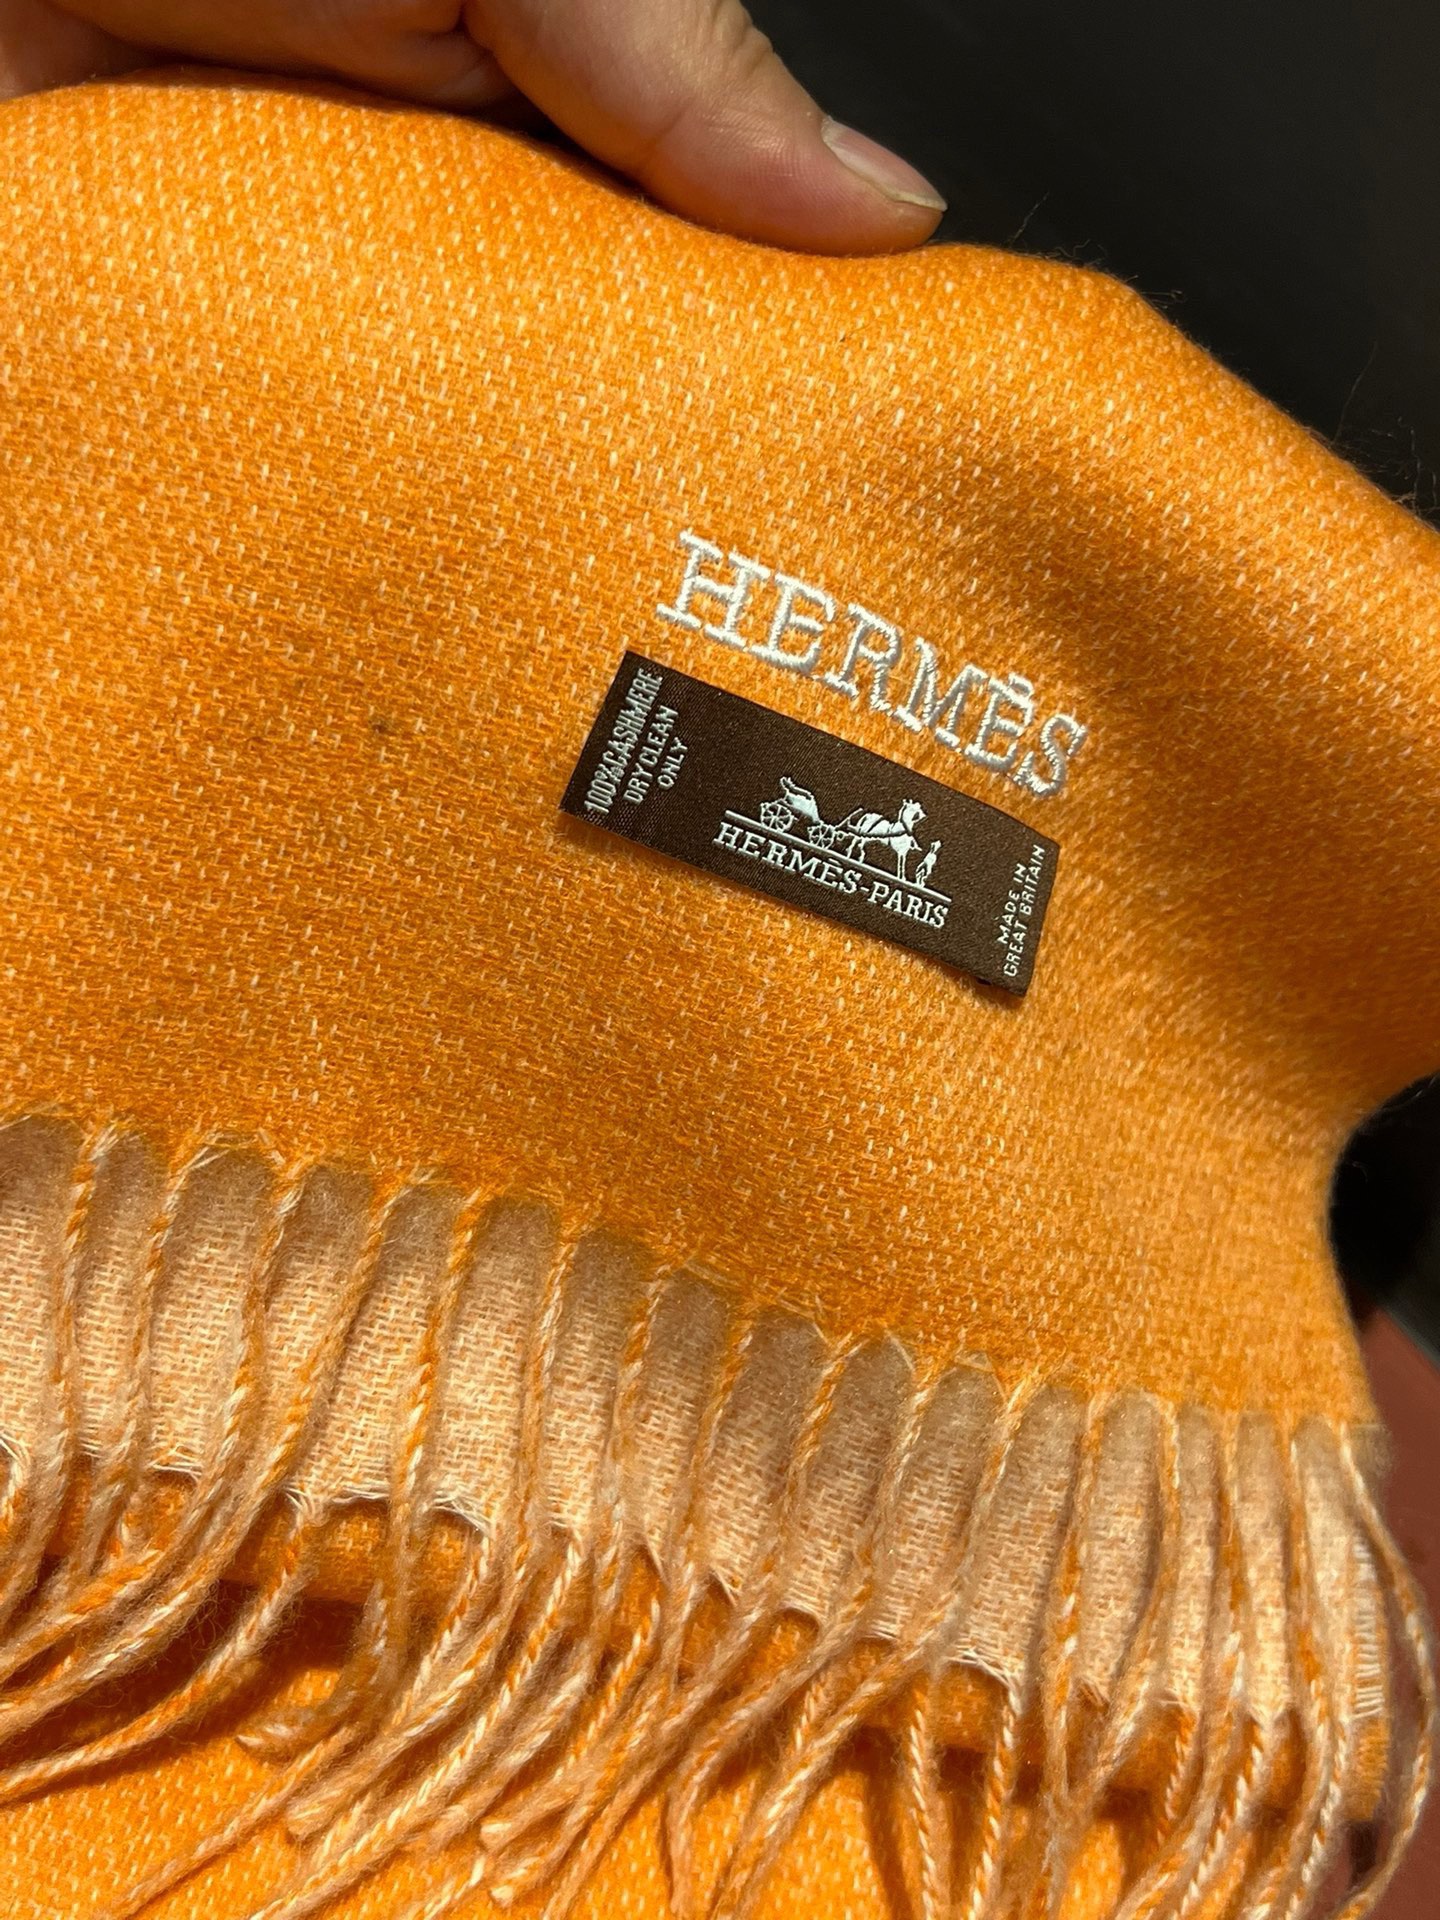 HERMFS爱马仕巴黎时装展双面羊绒围巾！采用蒙古高原细羊绒！手感满满地都是细腻的绒毛！这个价格绝对百分